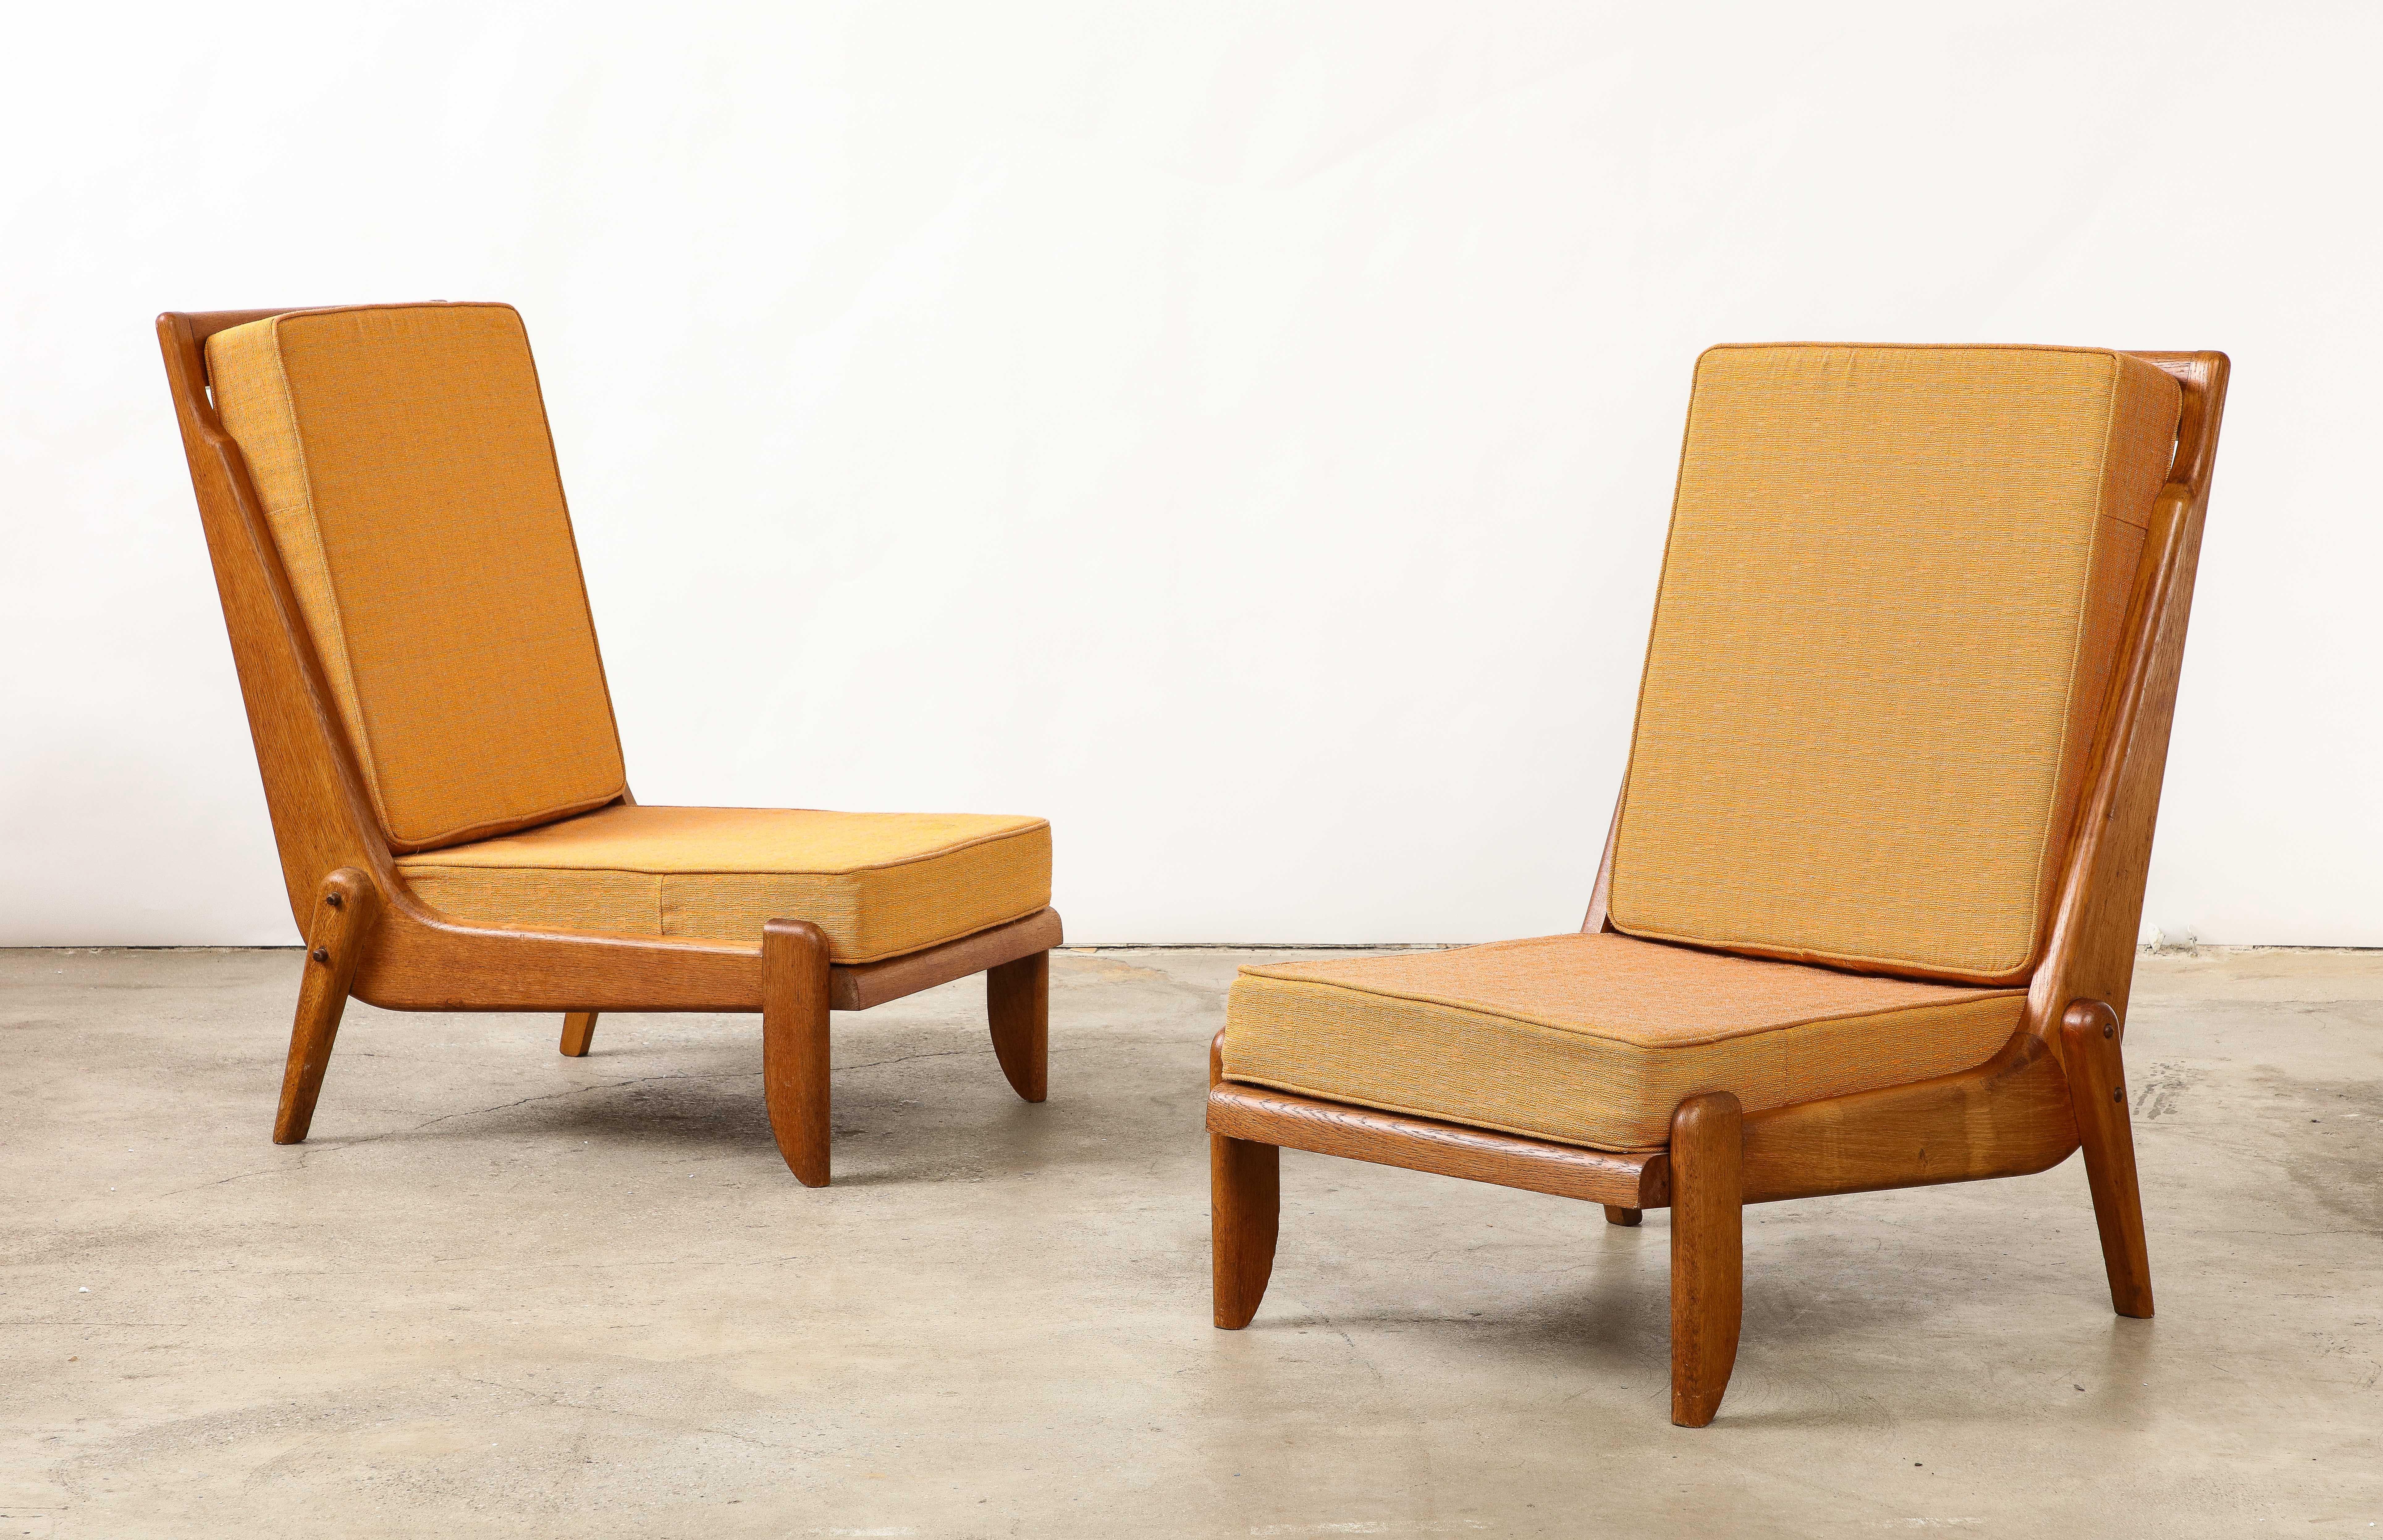 Guillerme et Chambron Oak Lounge Chair with Sculptural Legs, France, c. 1960 For Sale 7